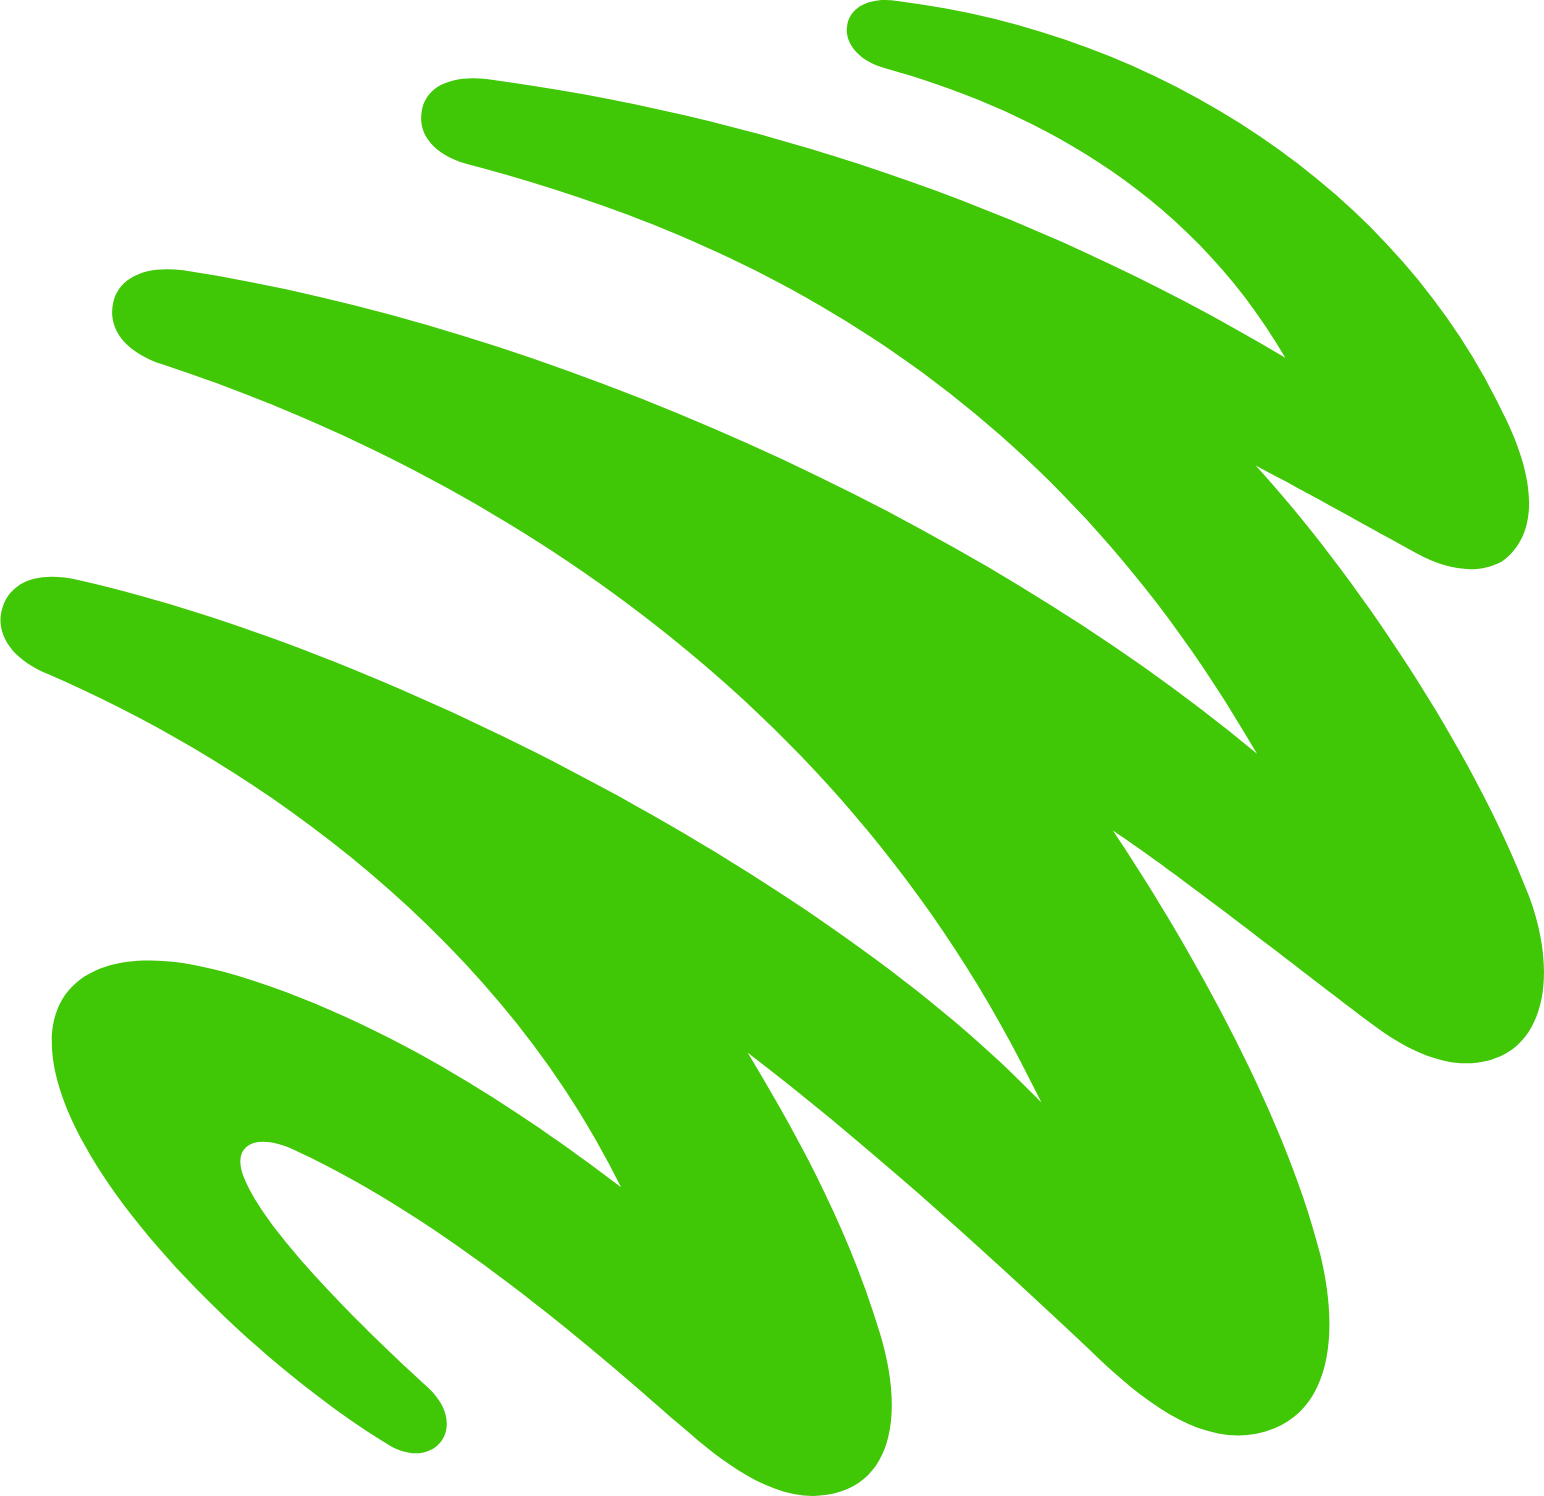 Maxis Berhad logo (transparent PNG)